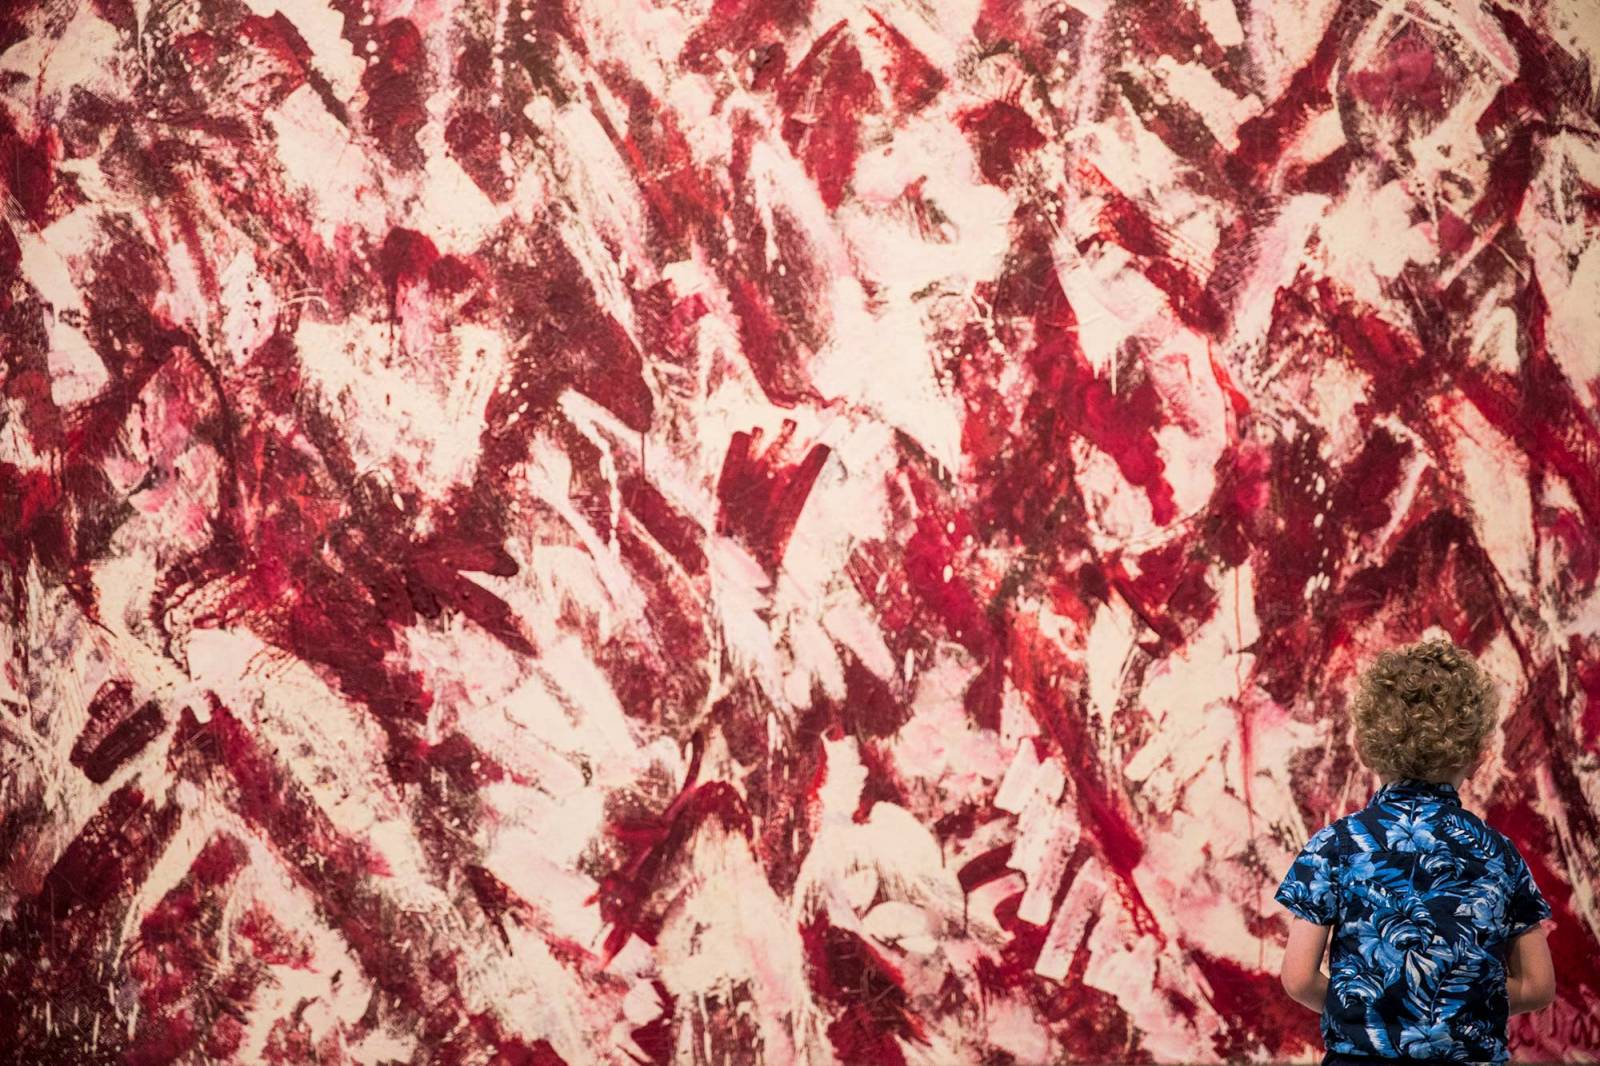 Praca Lee Krasner na wystawie „Living colour” (Fot. Getty Images)